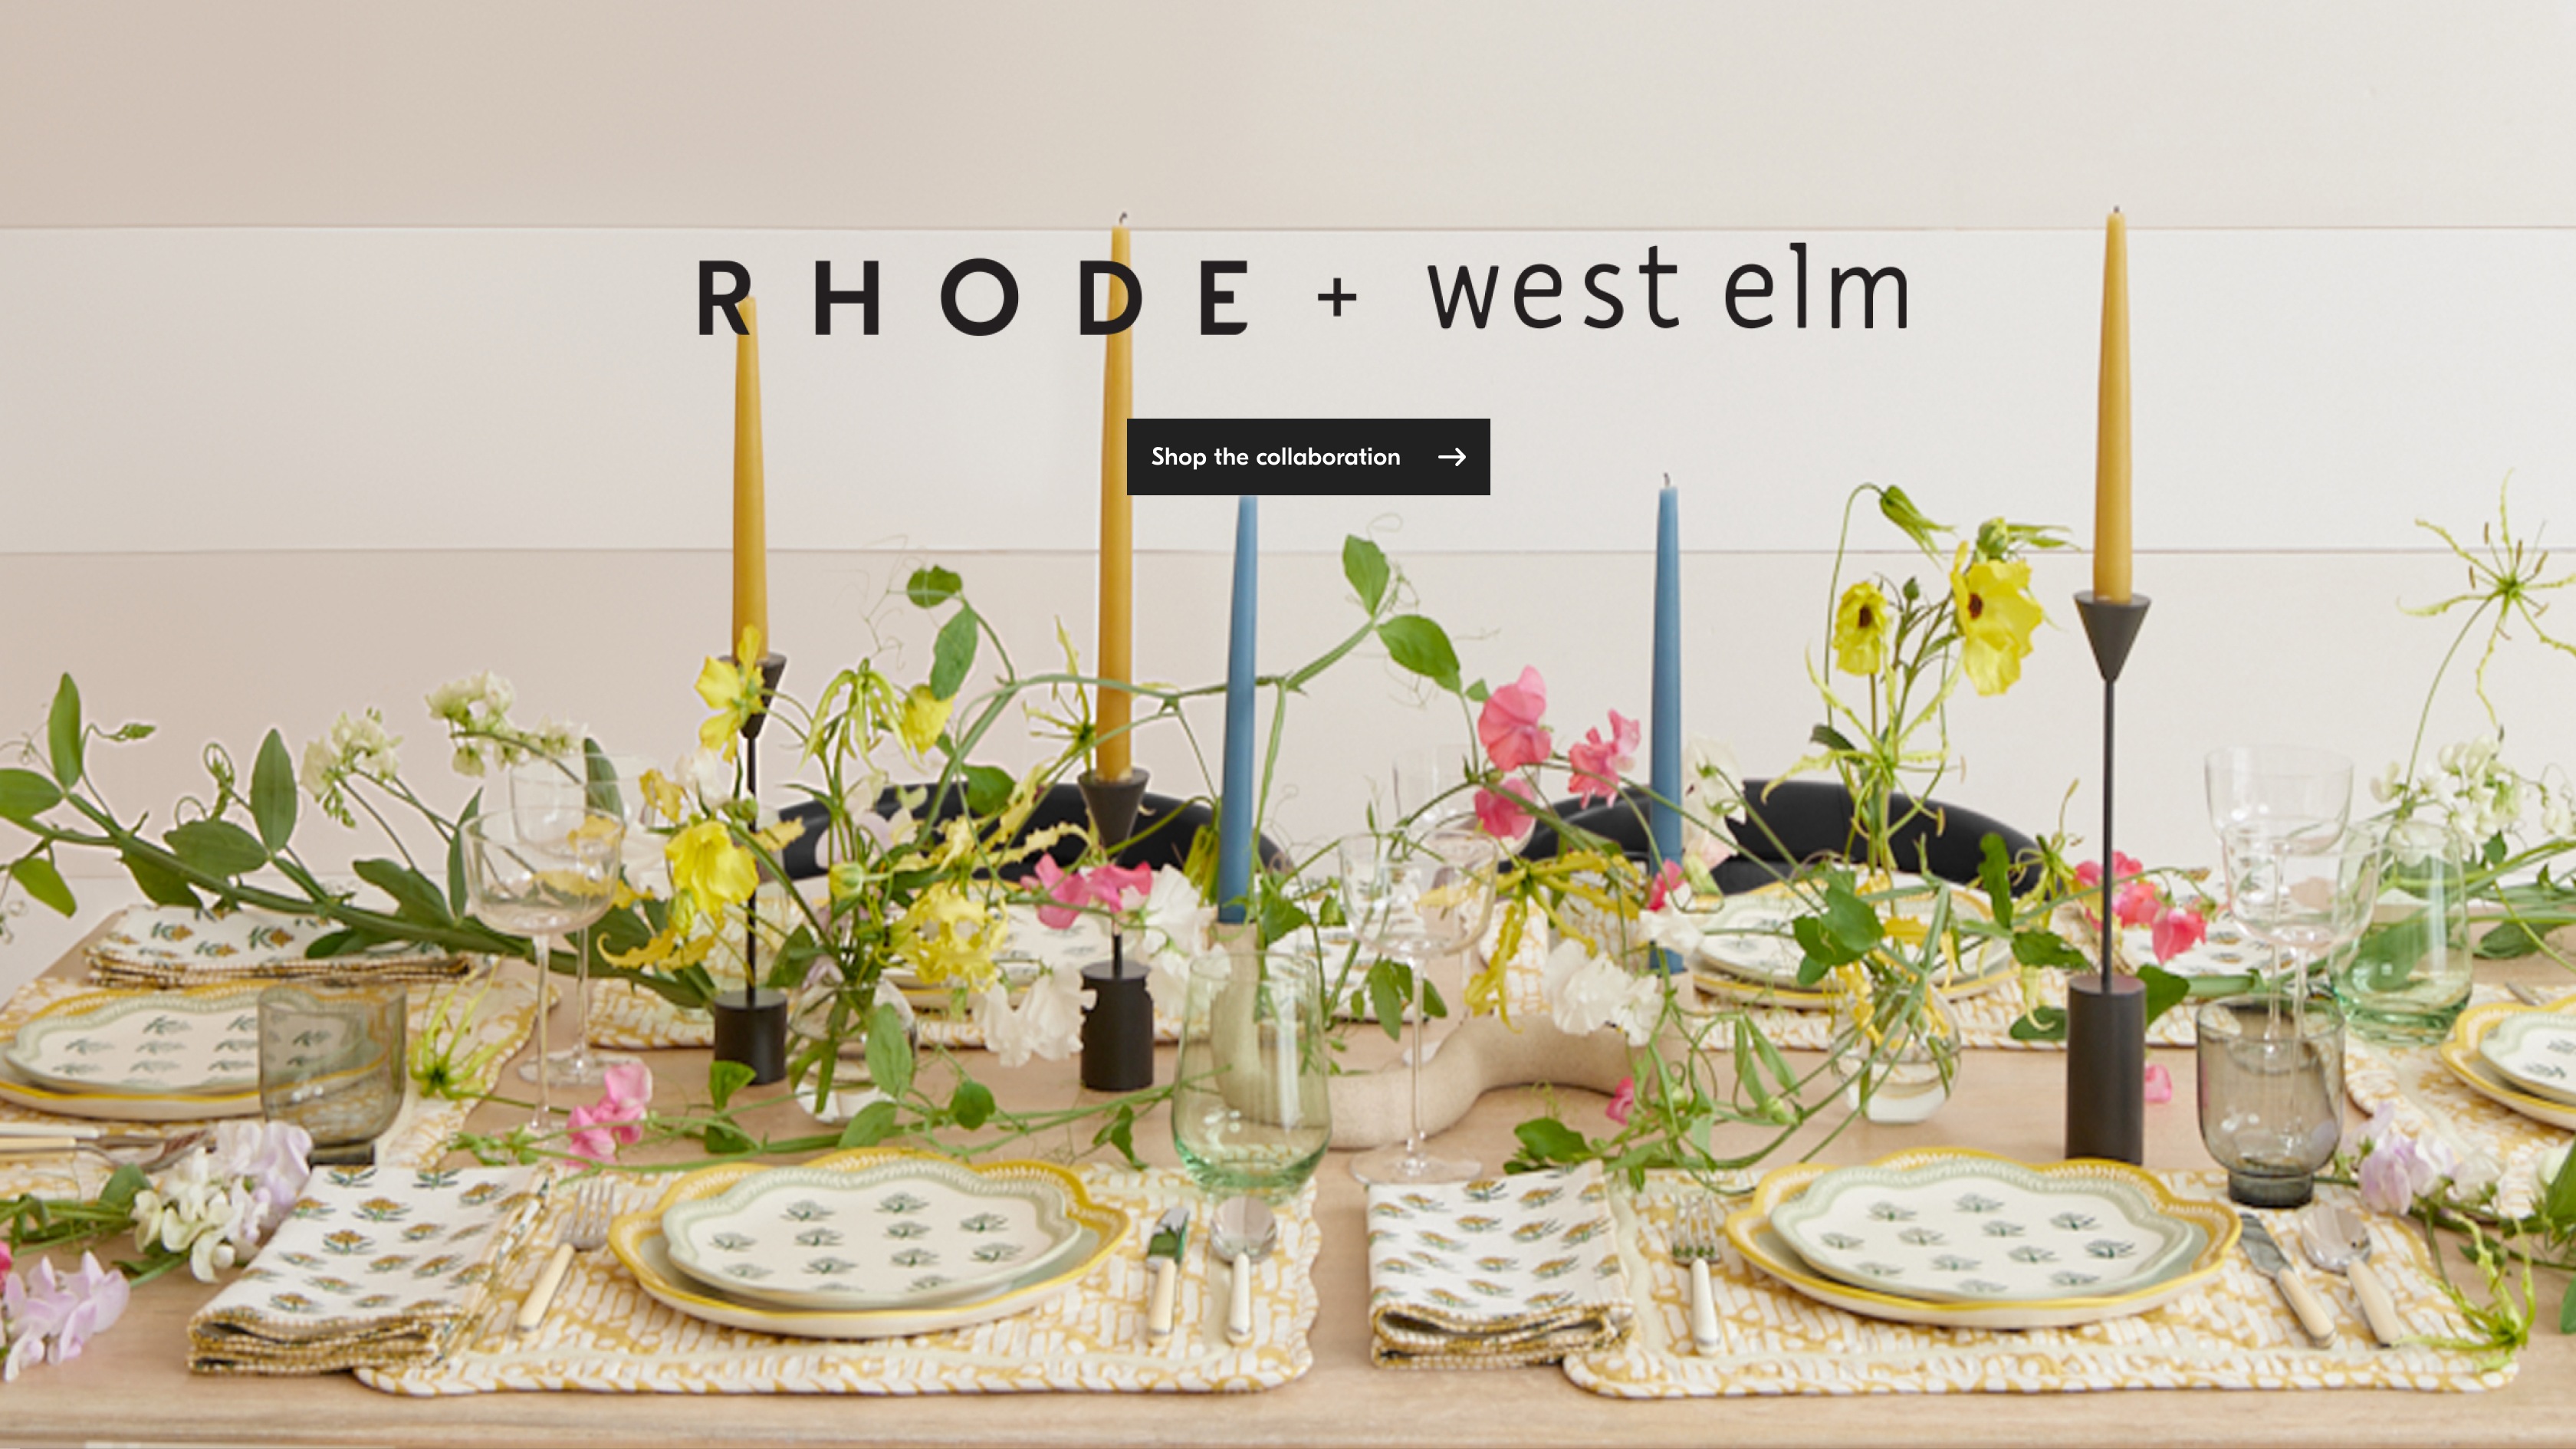 RHODE + west elm